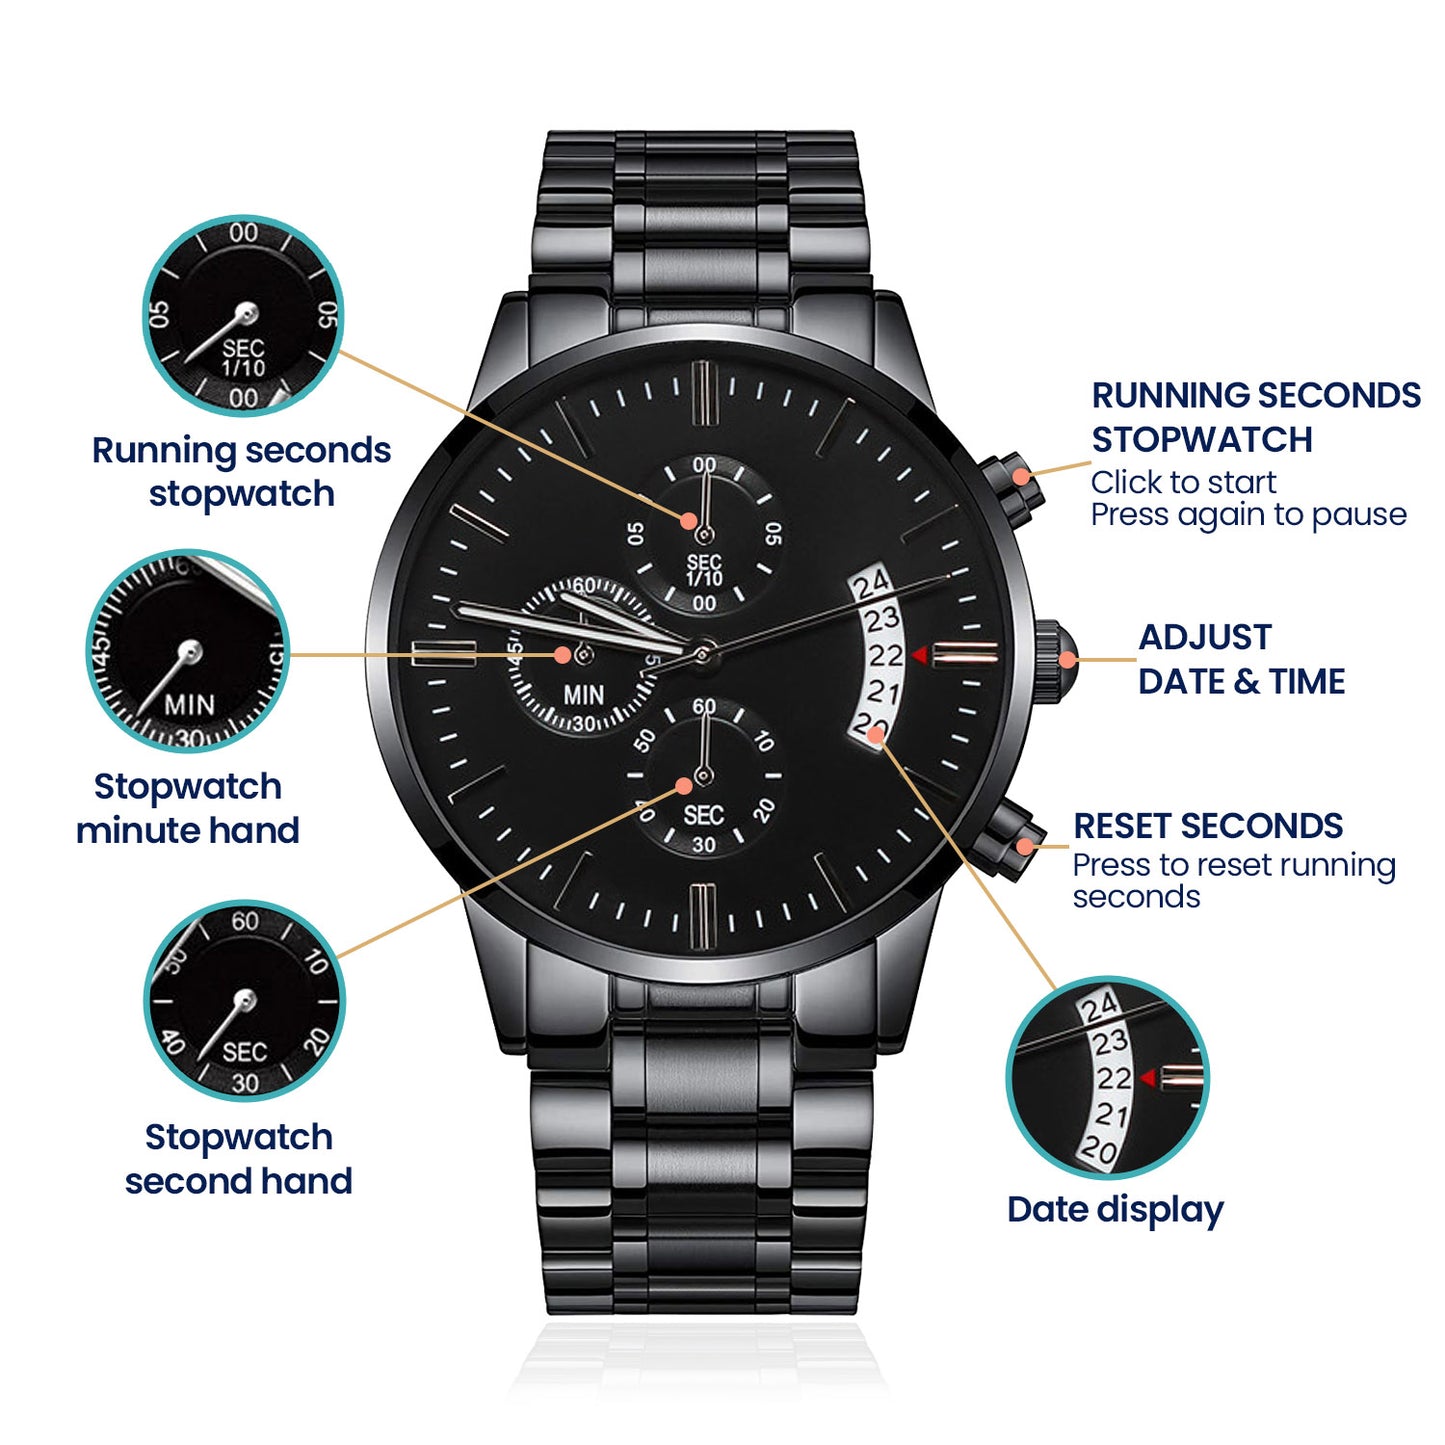 The Groomsman - Groomsmen Proposal Gift - Black Chronograph Watch